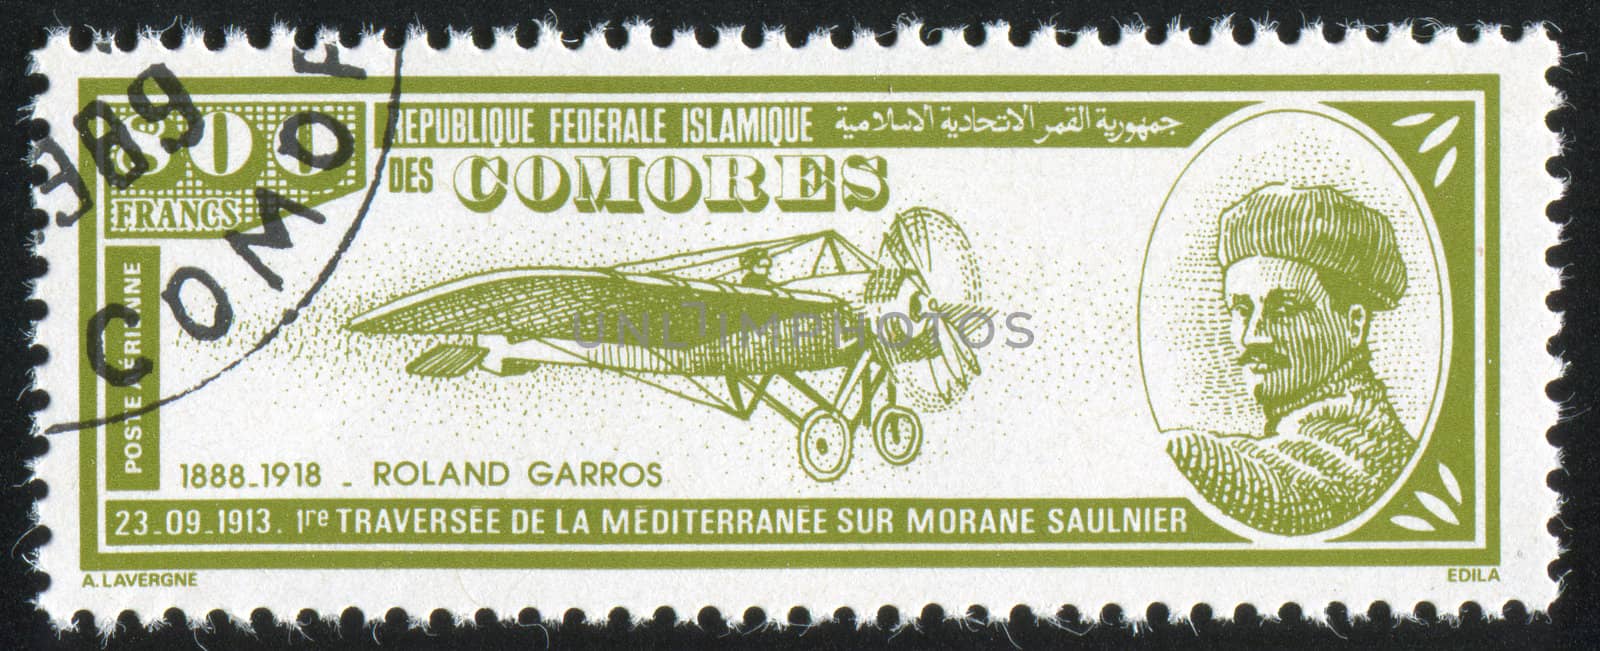 COMORO ISLANDS - CIRCA 1988: stamp printed by Comoro islands, shows airplane and Roland Garros, circa 1988